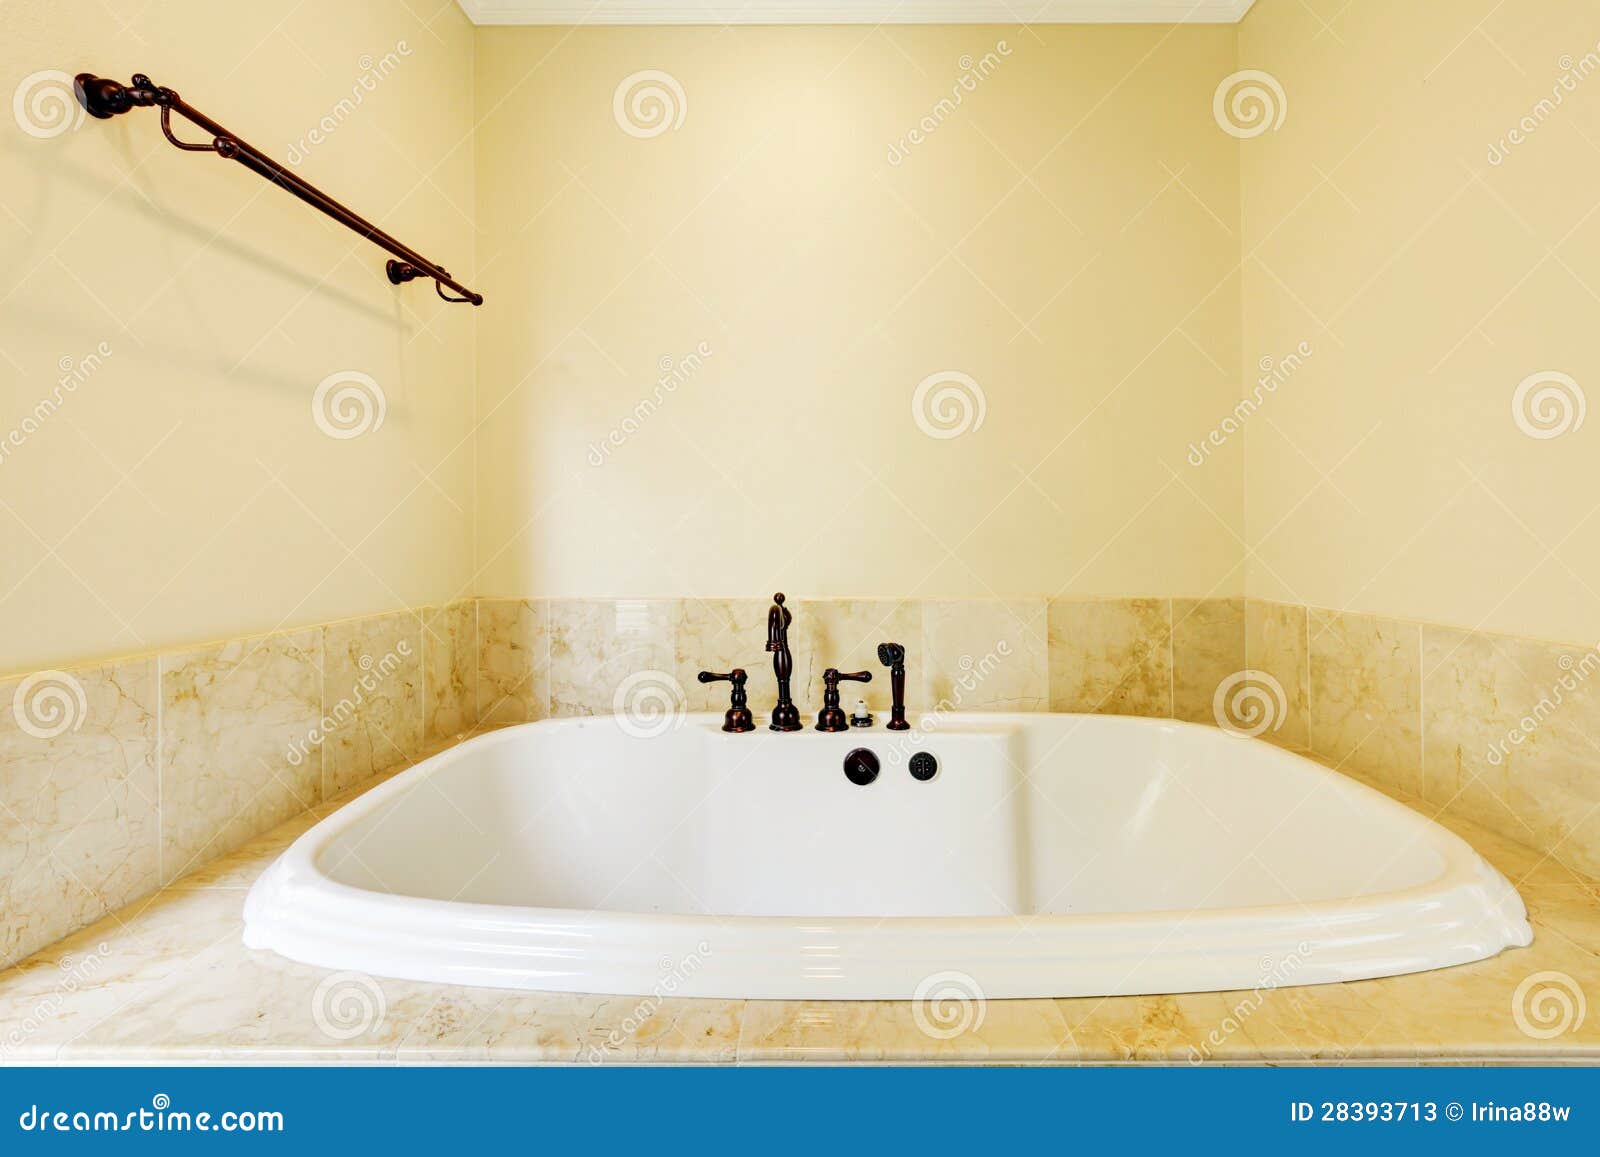 Nice Empty Bathroom With Large White Tub Stock Image - Image of design